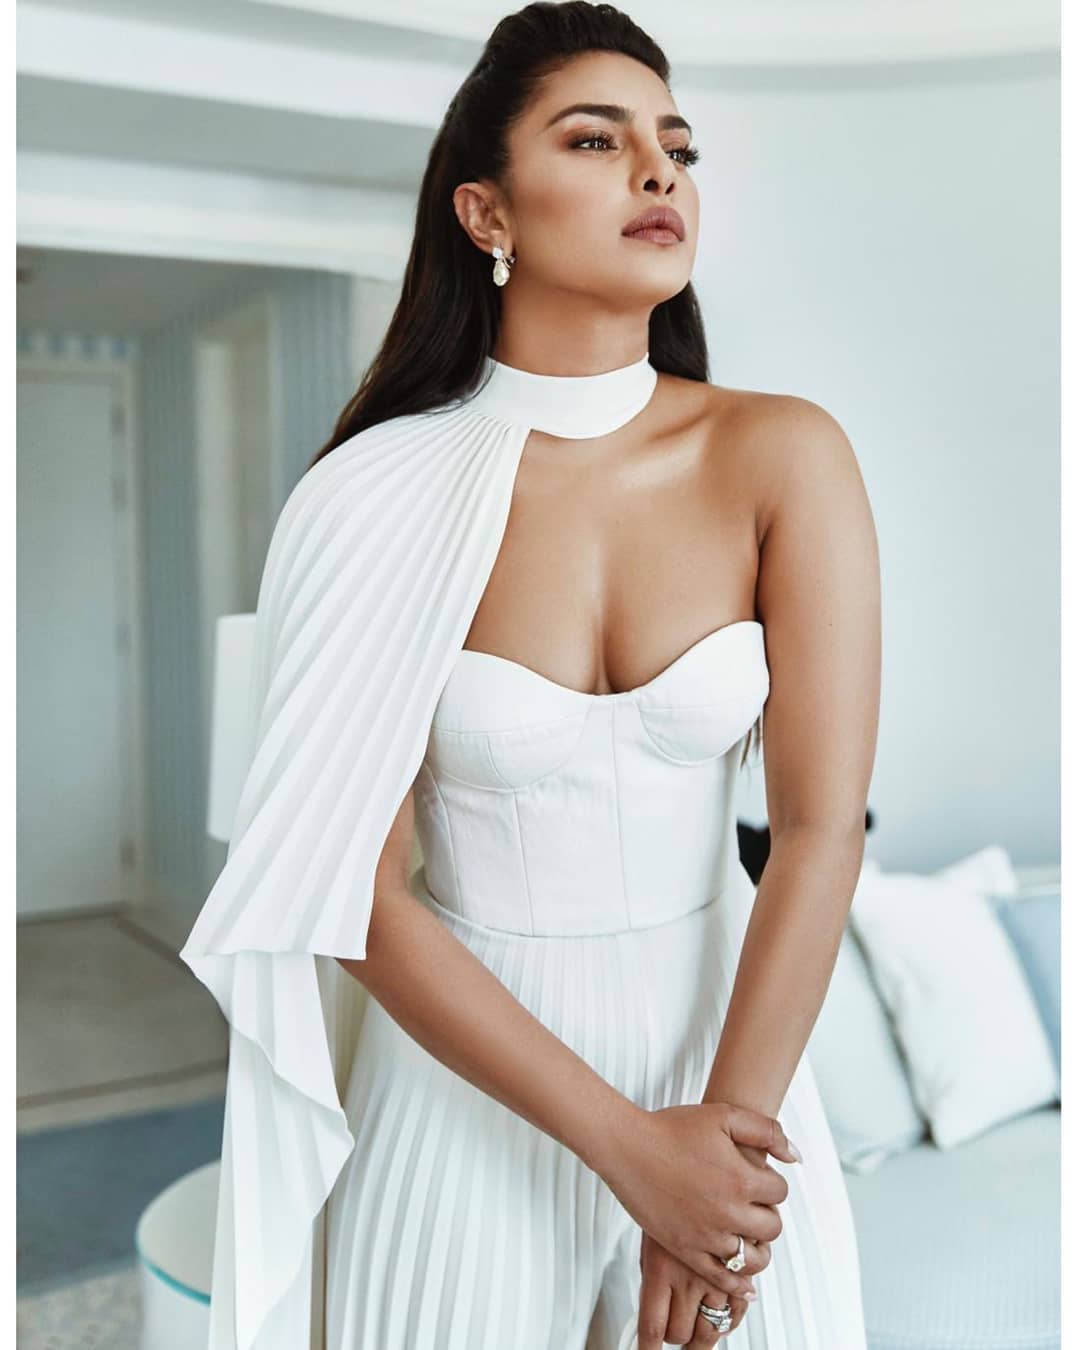 Cannes 2019: Priyanka Chopra Steals The Show In The Classic White Ensemble